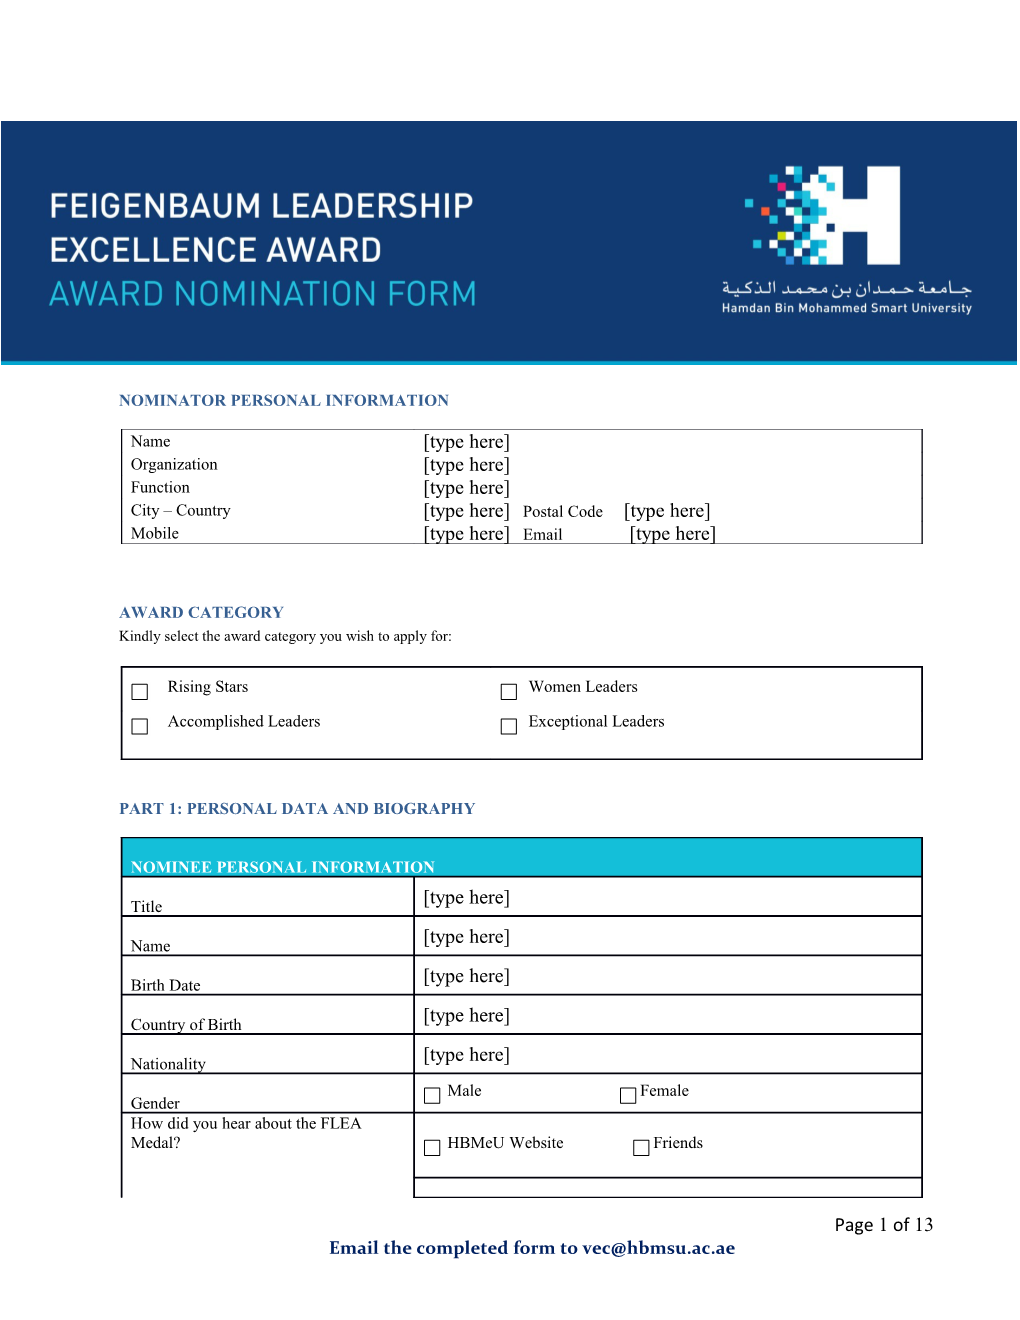 Feigenbaum Leadership Excellence Award